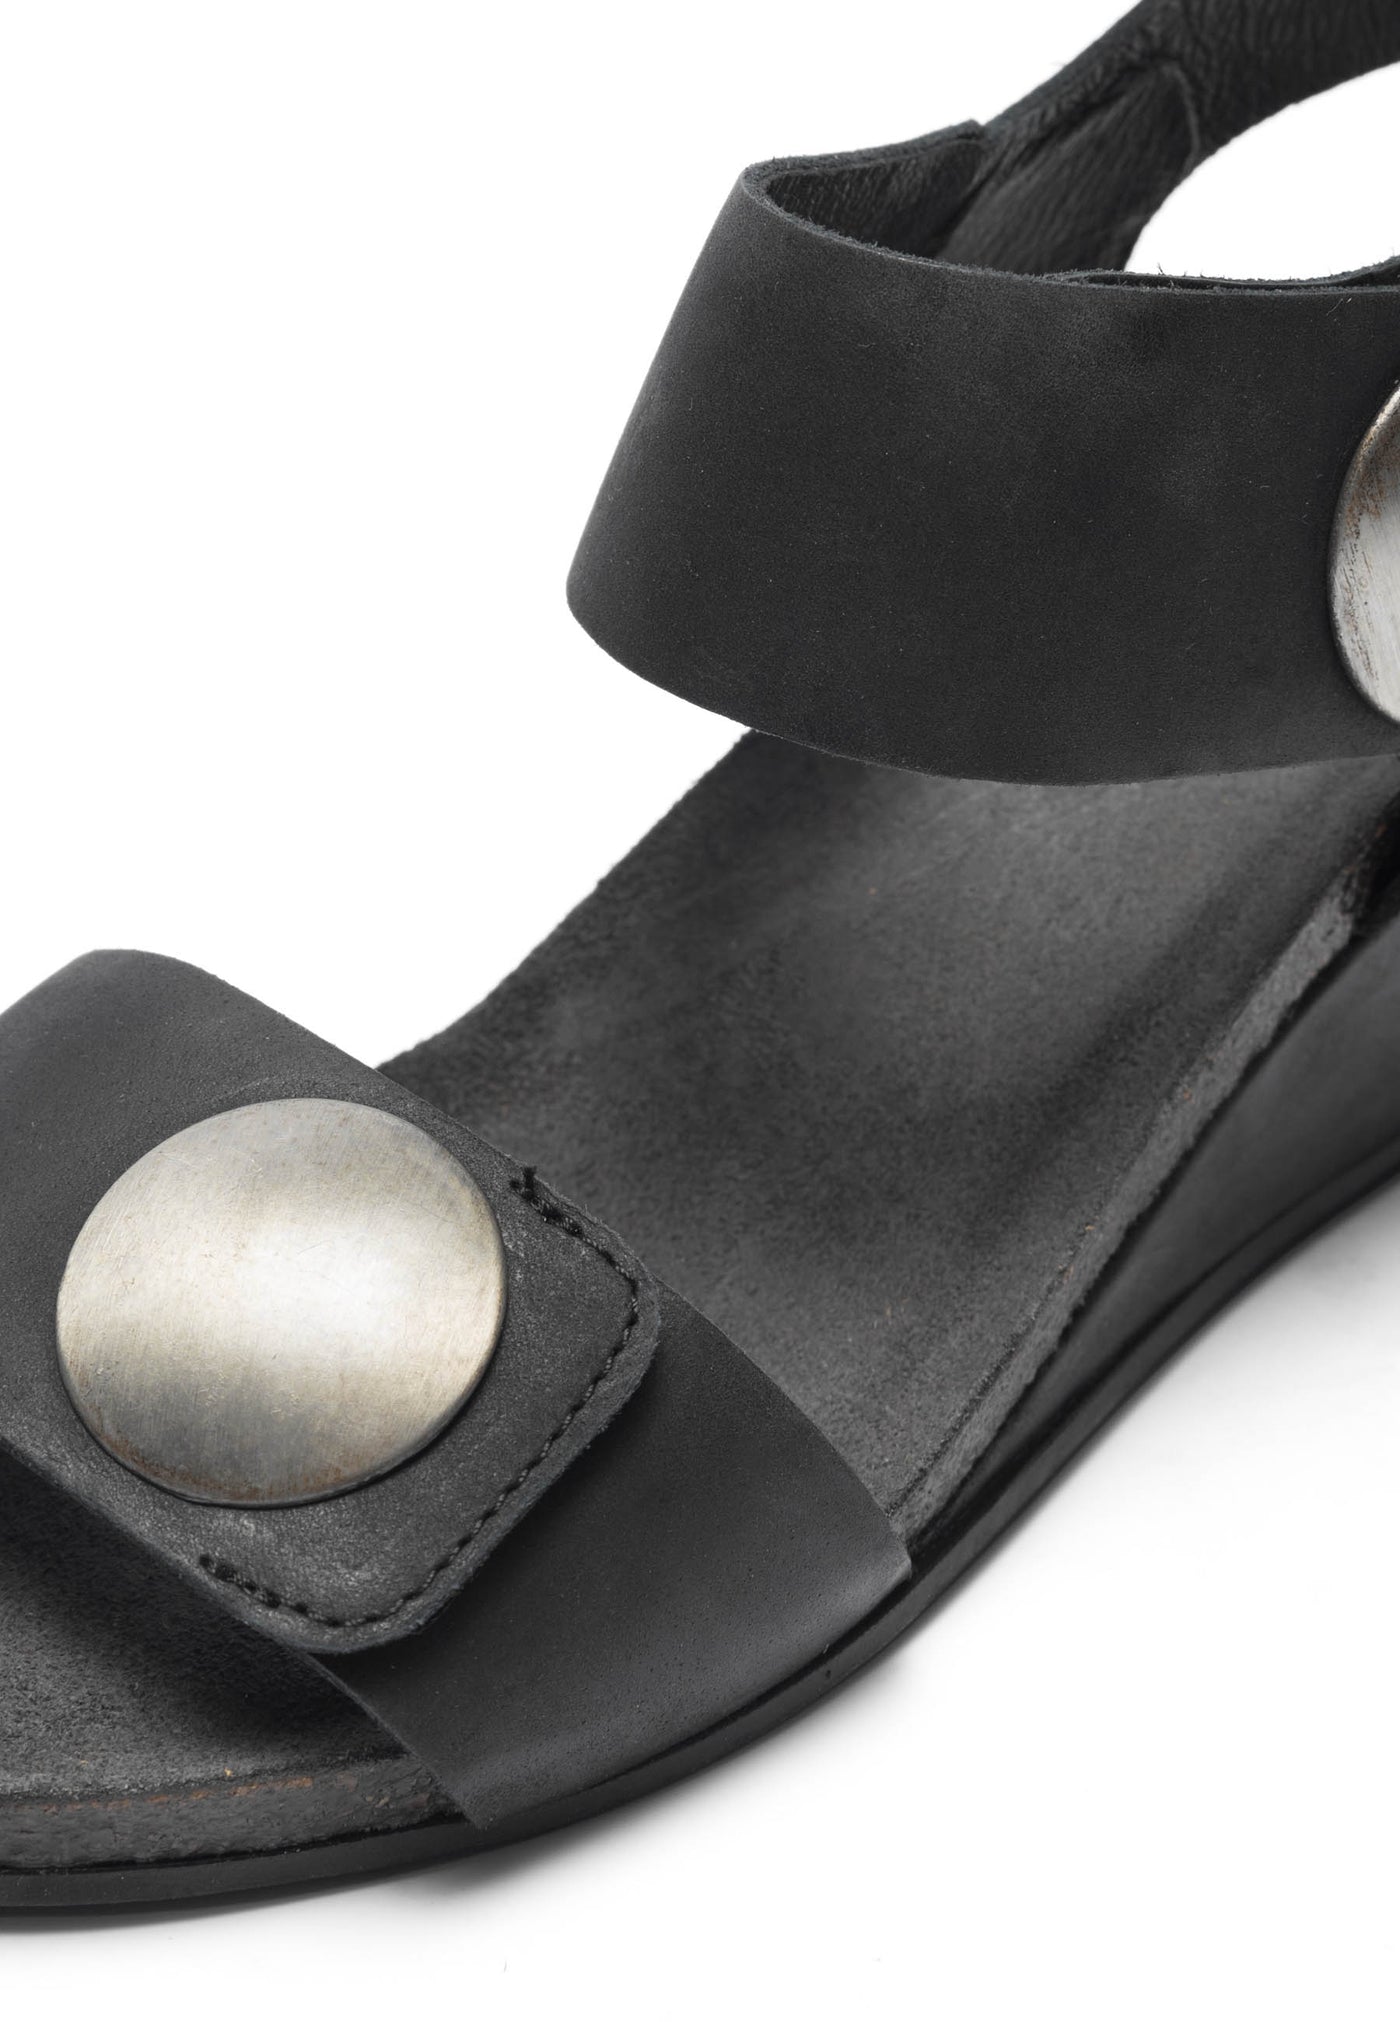 CASHOTT CASALBERTA Velcro Button Sandal Nubuck Velcro Black